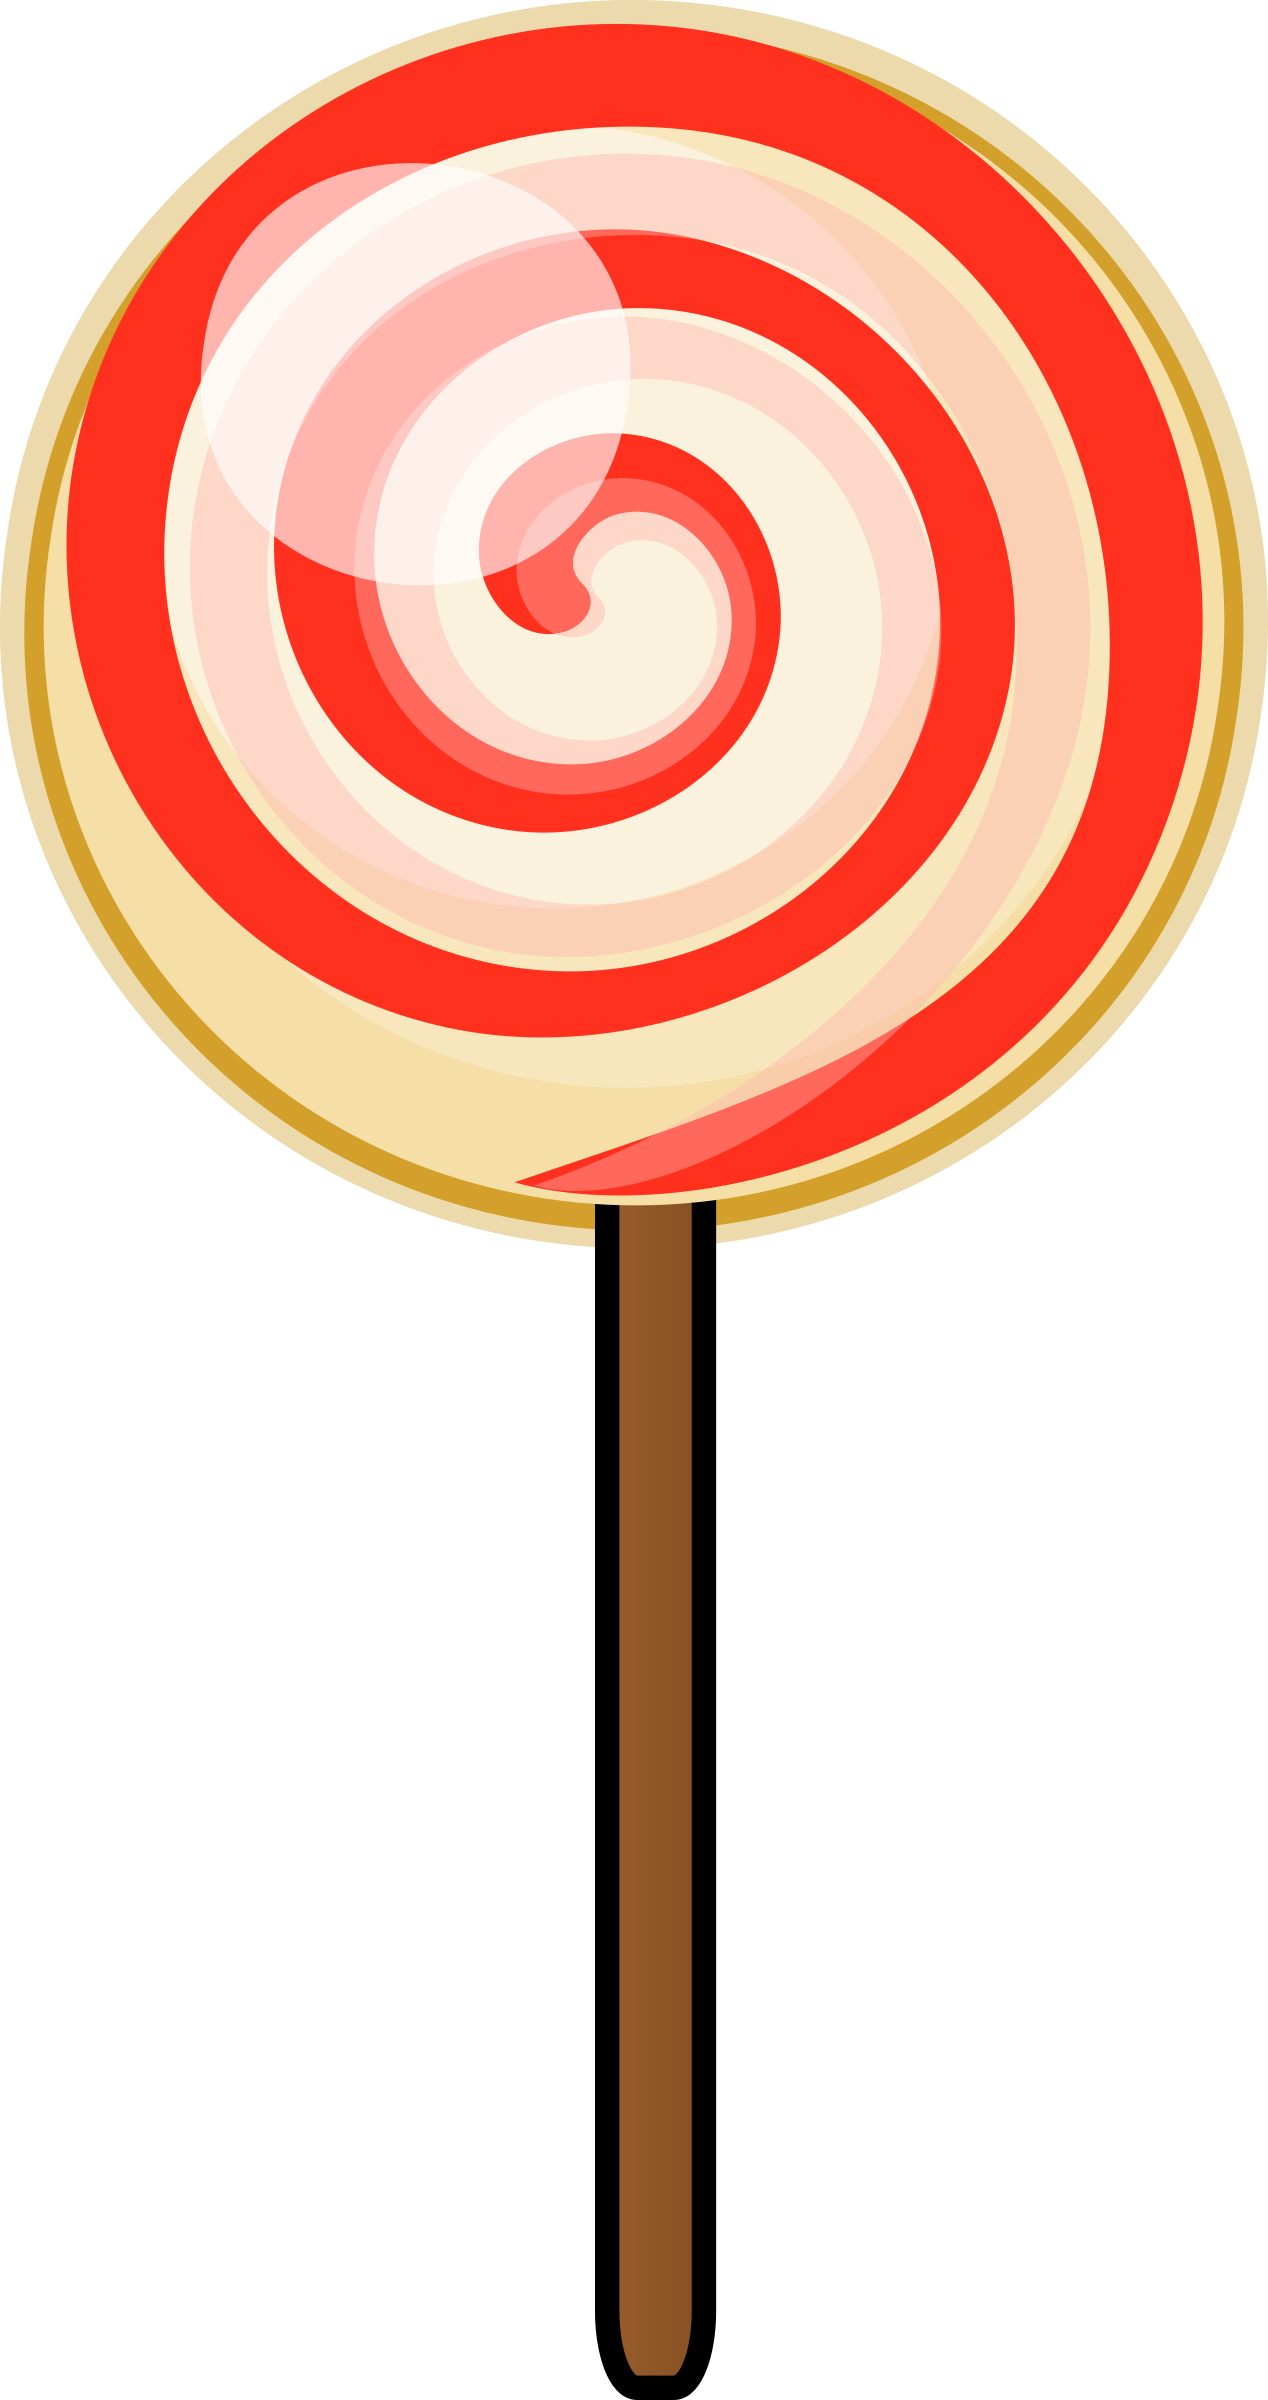 Colorful Lollipop PNG Image Transparent Background